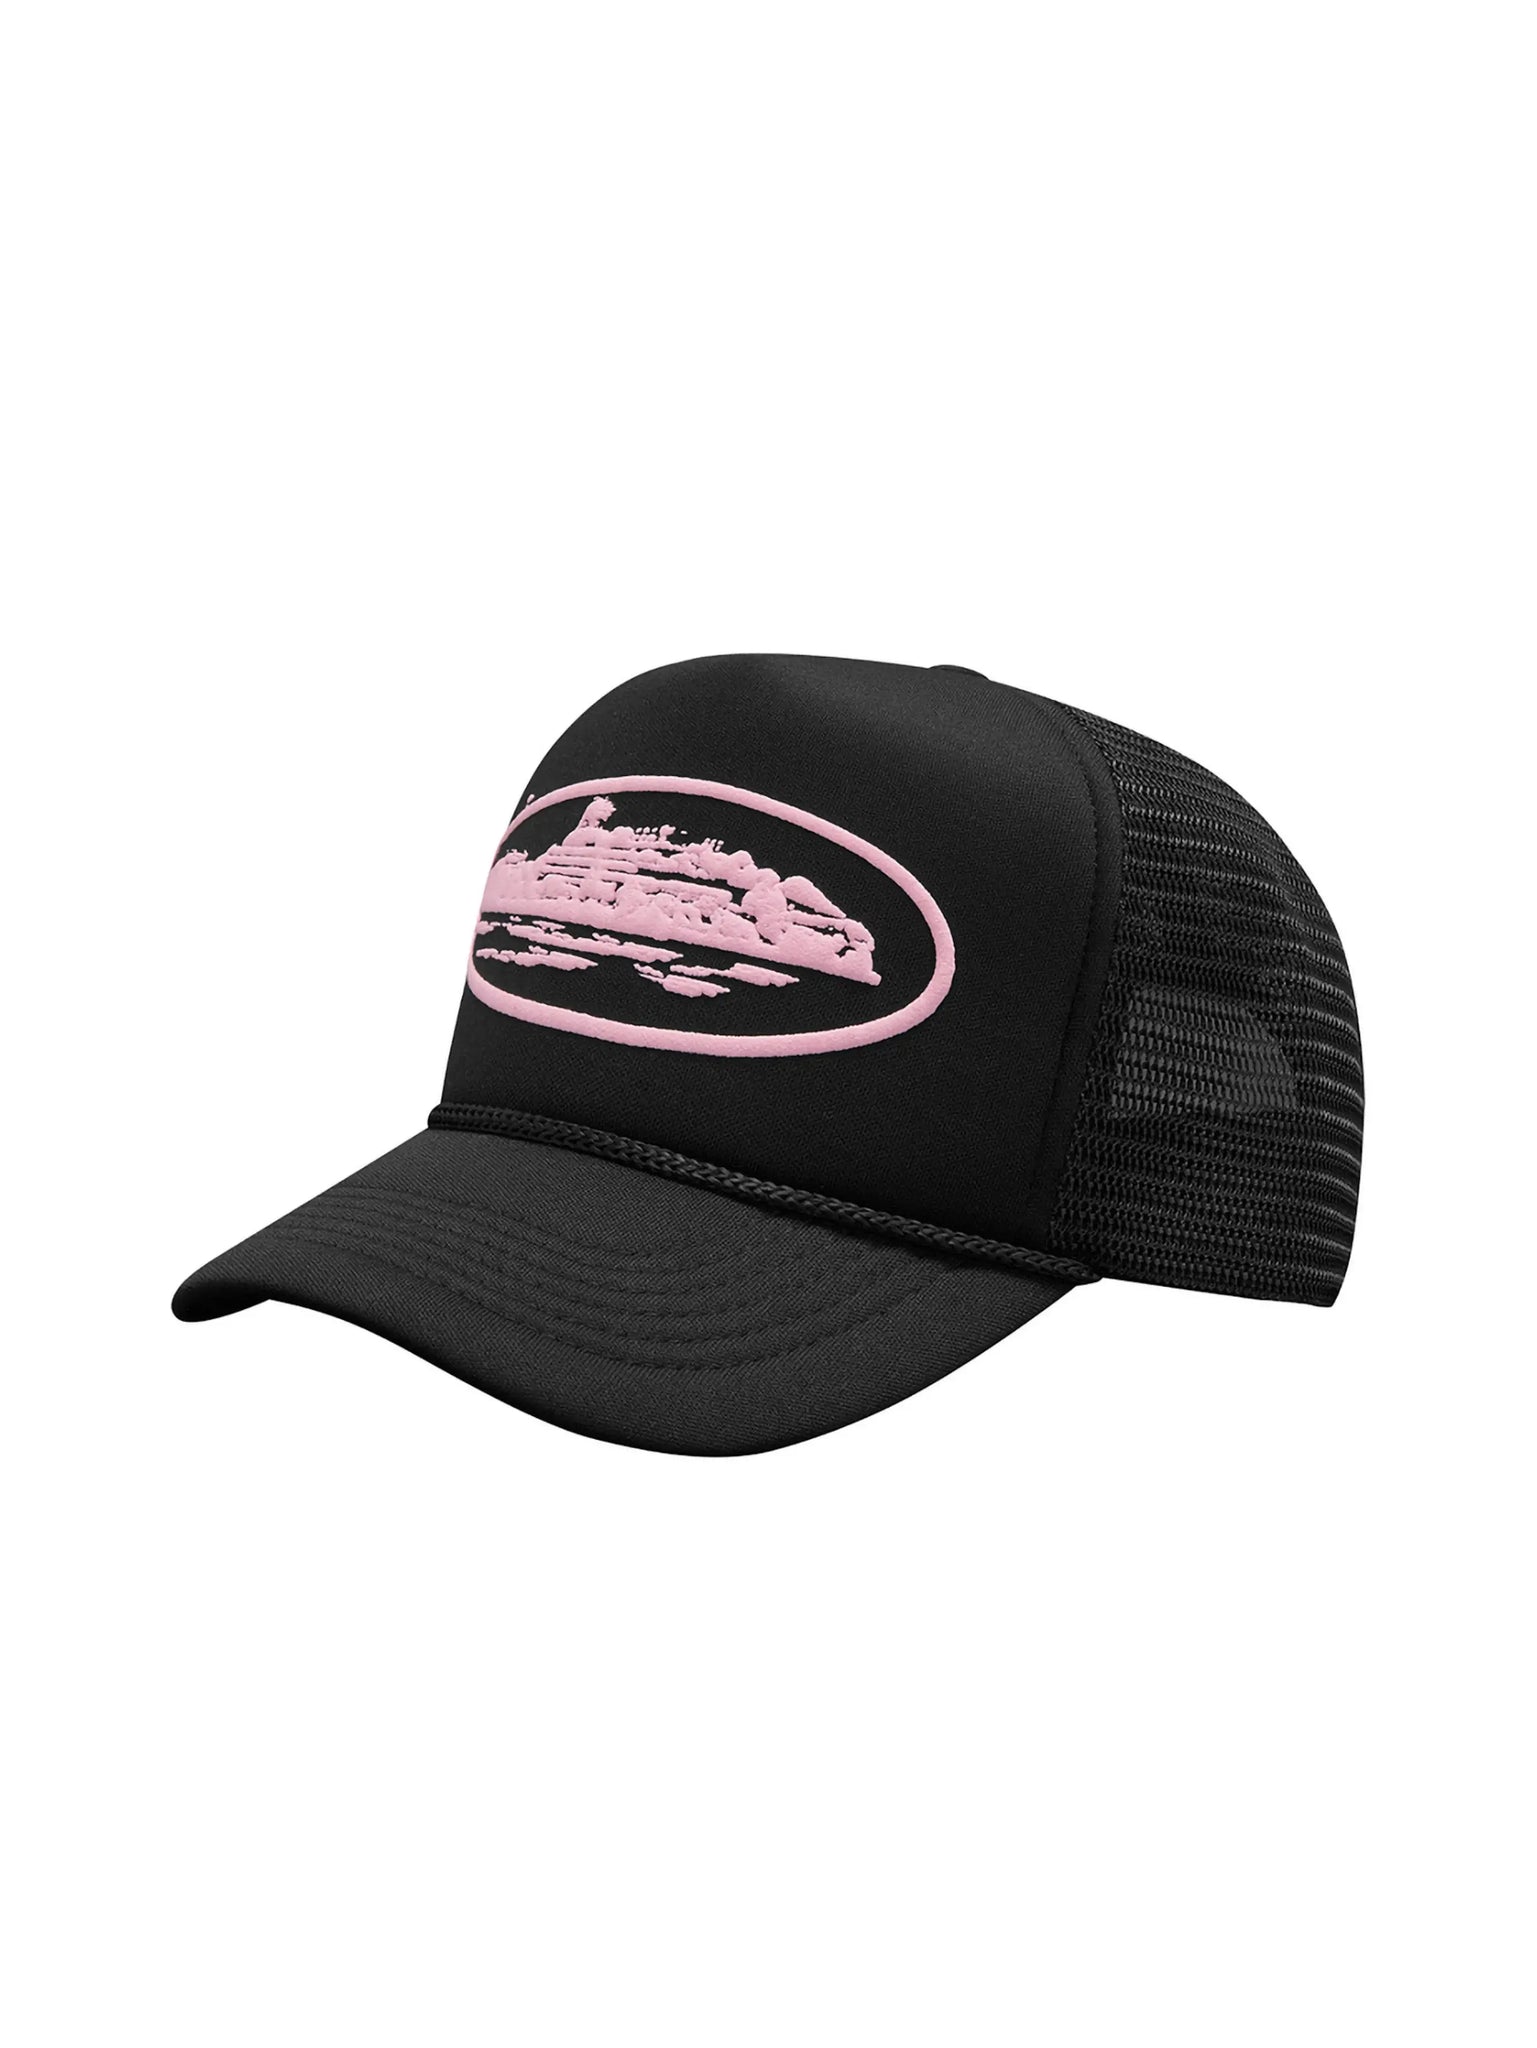 Corteiz Alcatraz Premium Trucker Hat Black/Pink in Melbourne, Australia - Prior